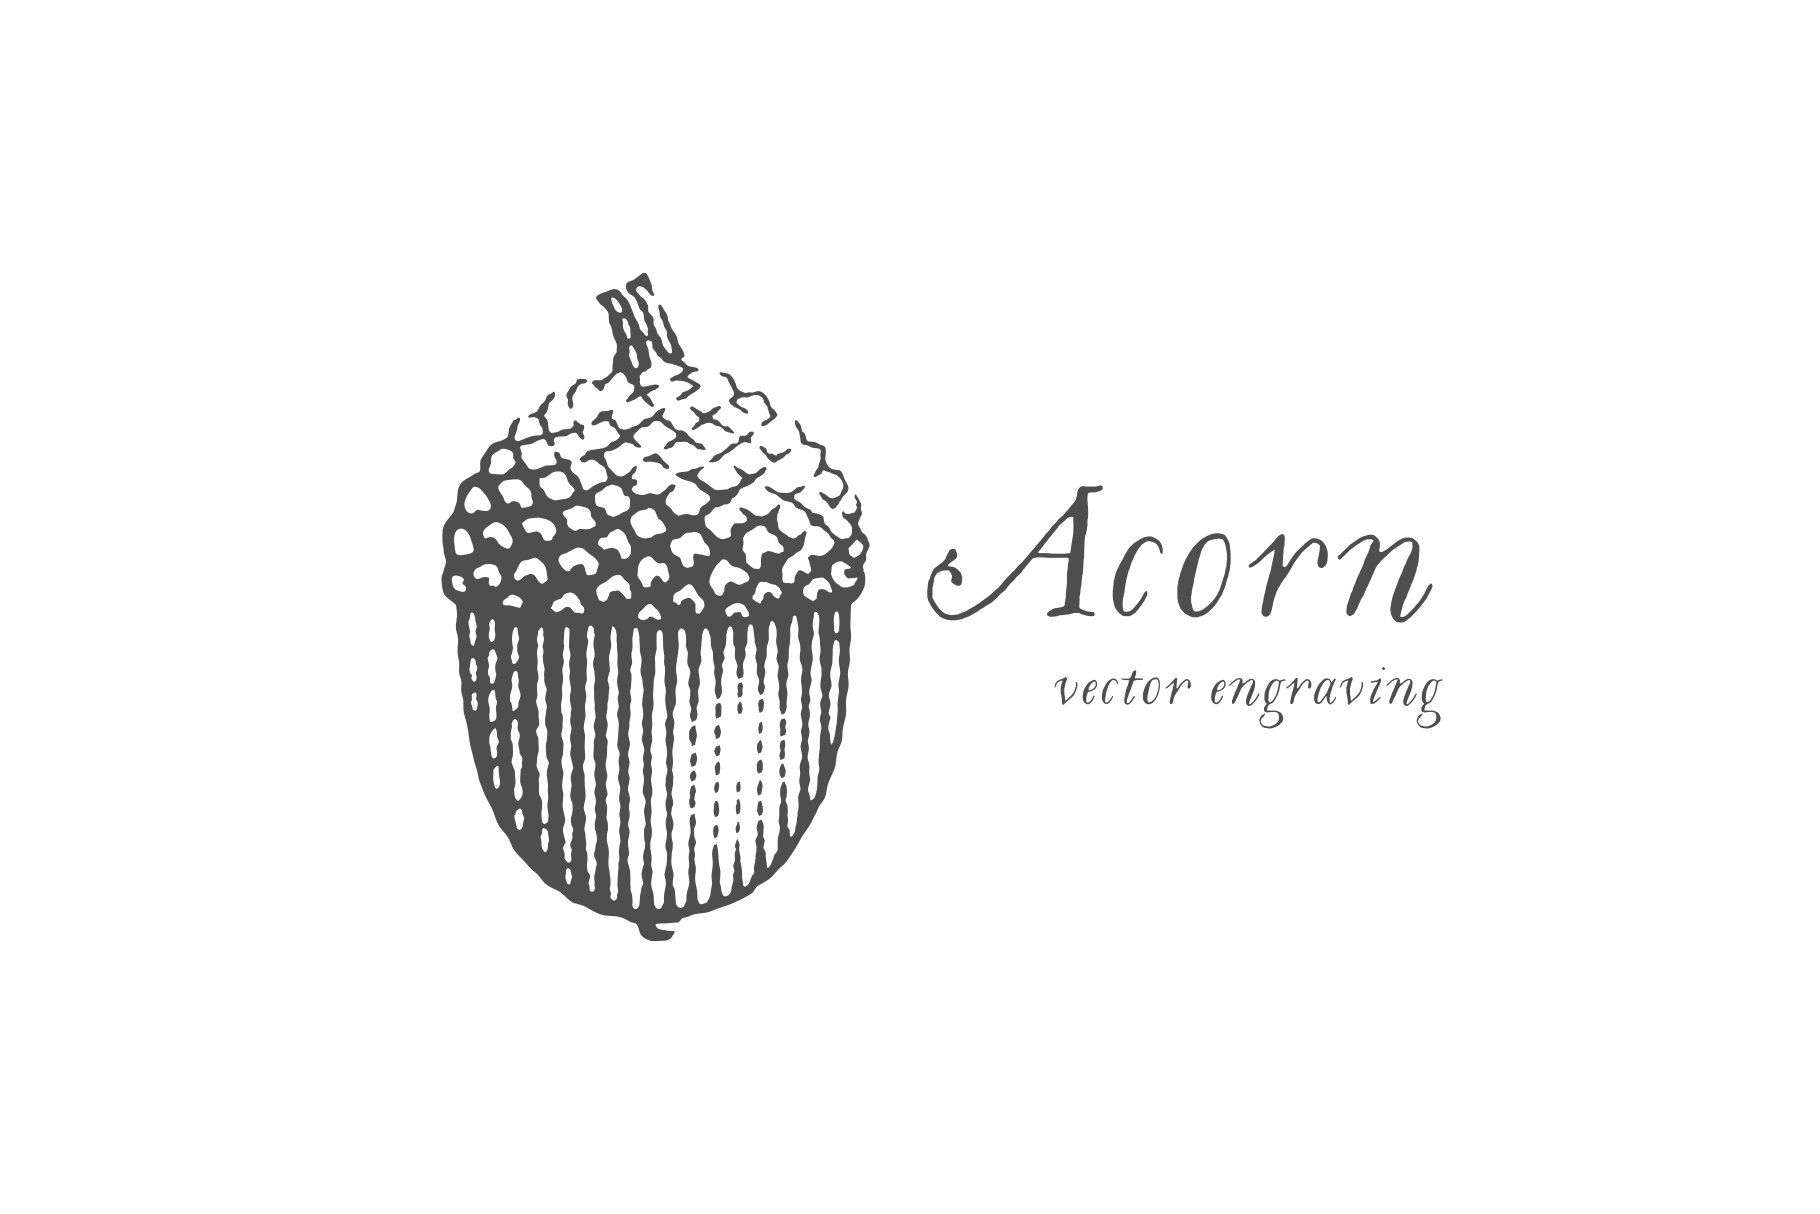 Acorn cover image.